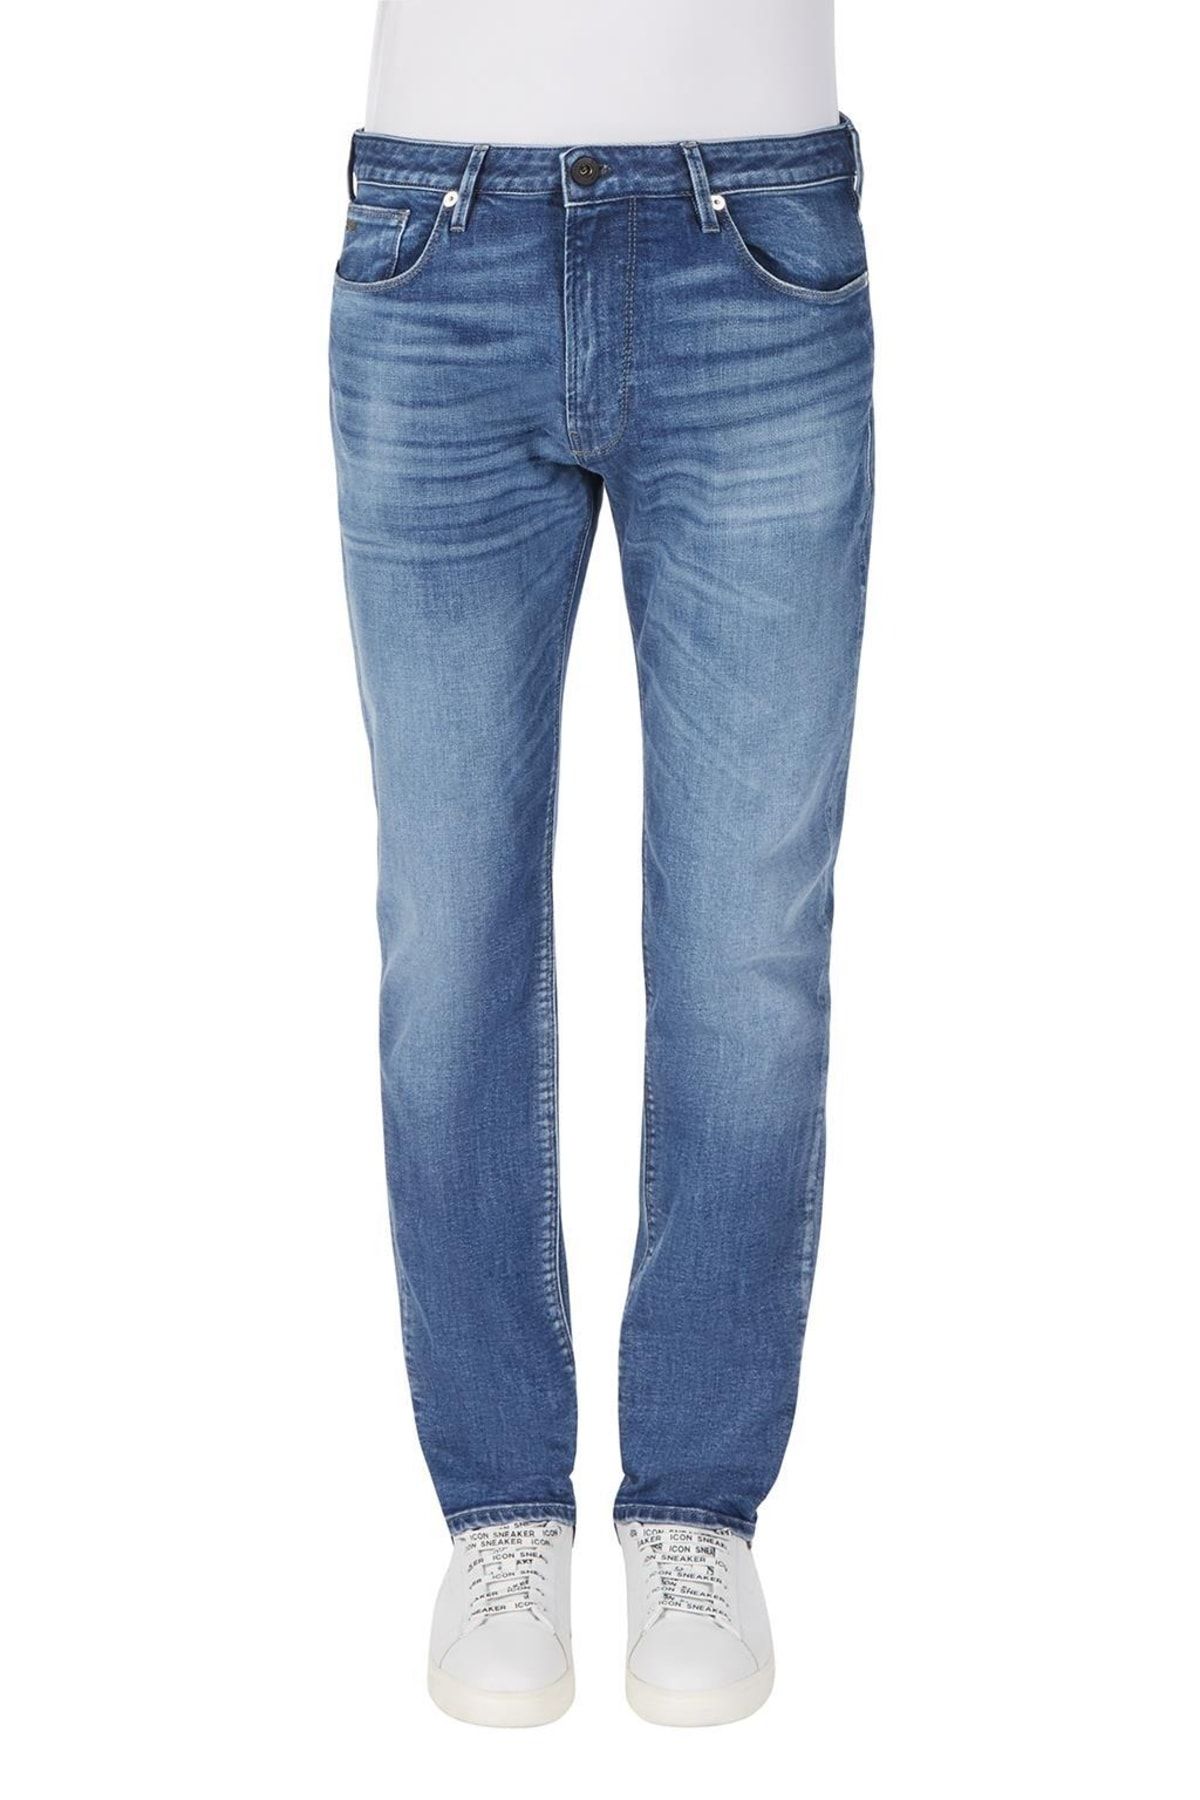 Emporio Armani Kadın Mavi Jeans 6k1j06 1dn3z-mavı